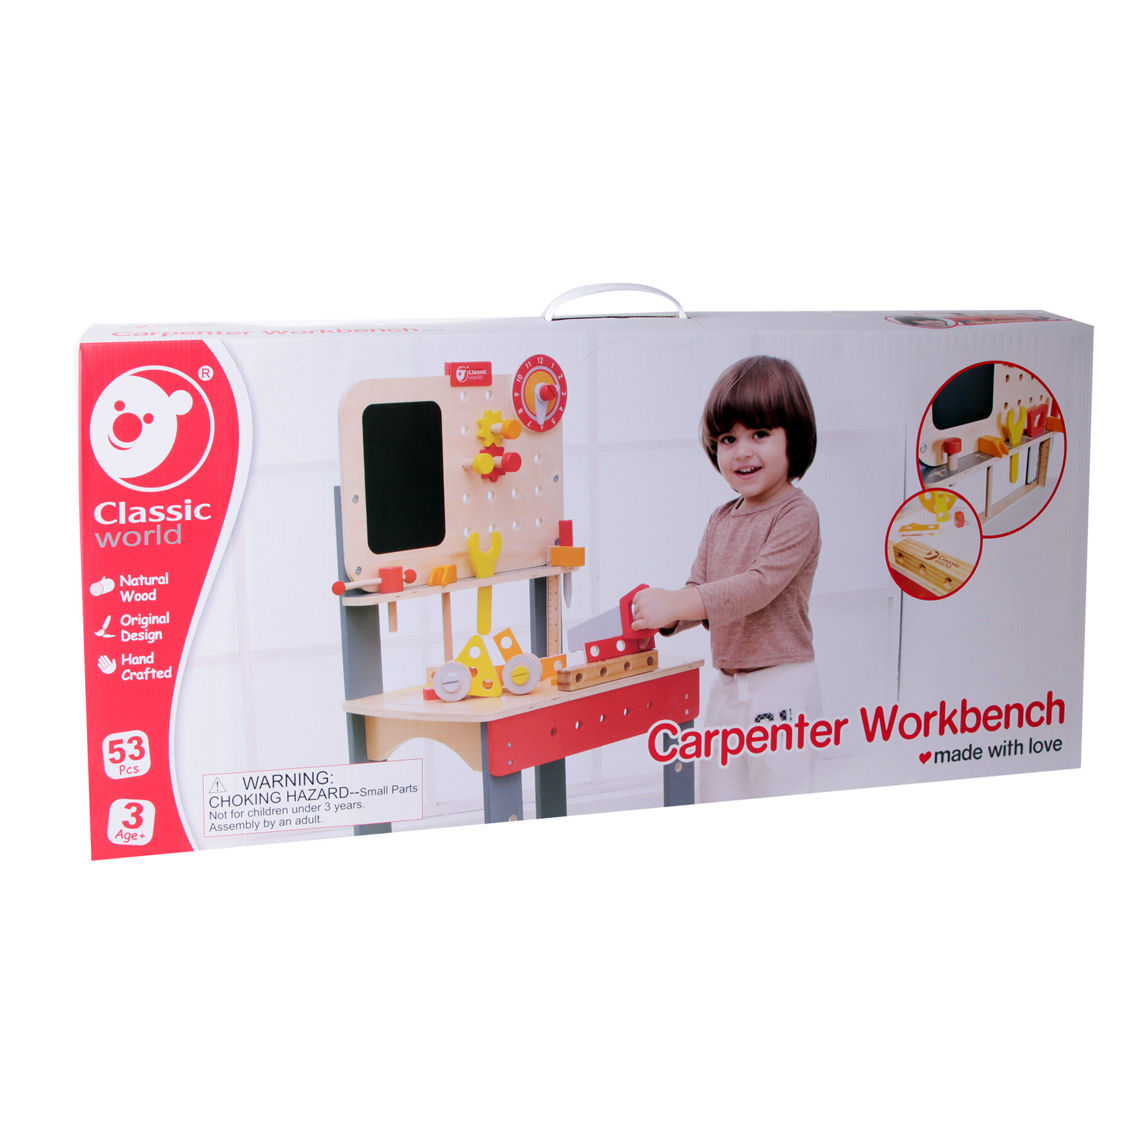 Classic World Toys Carpenter Workbench - Image 3 of 3